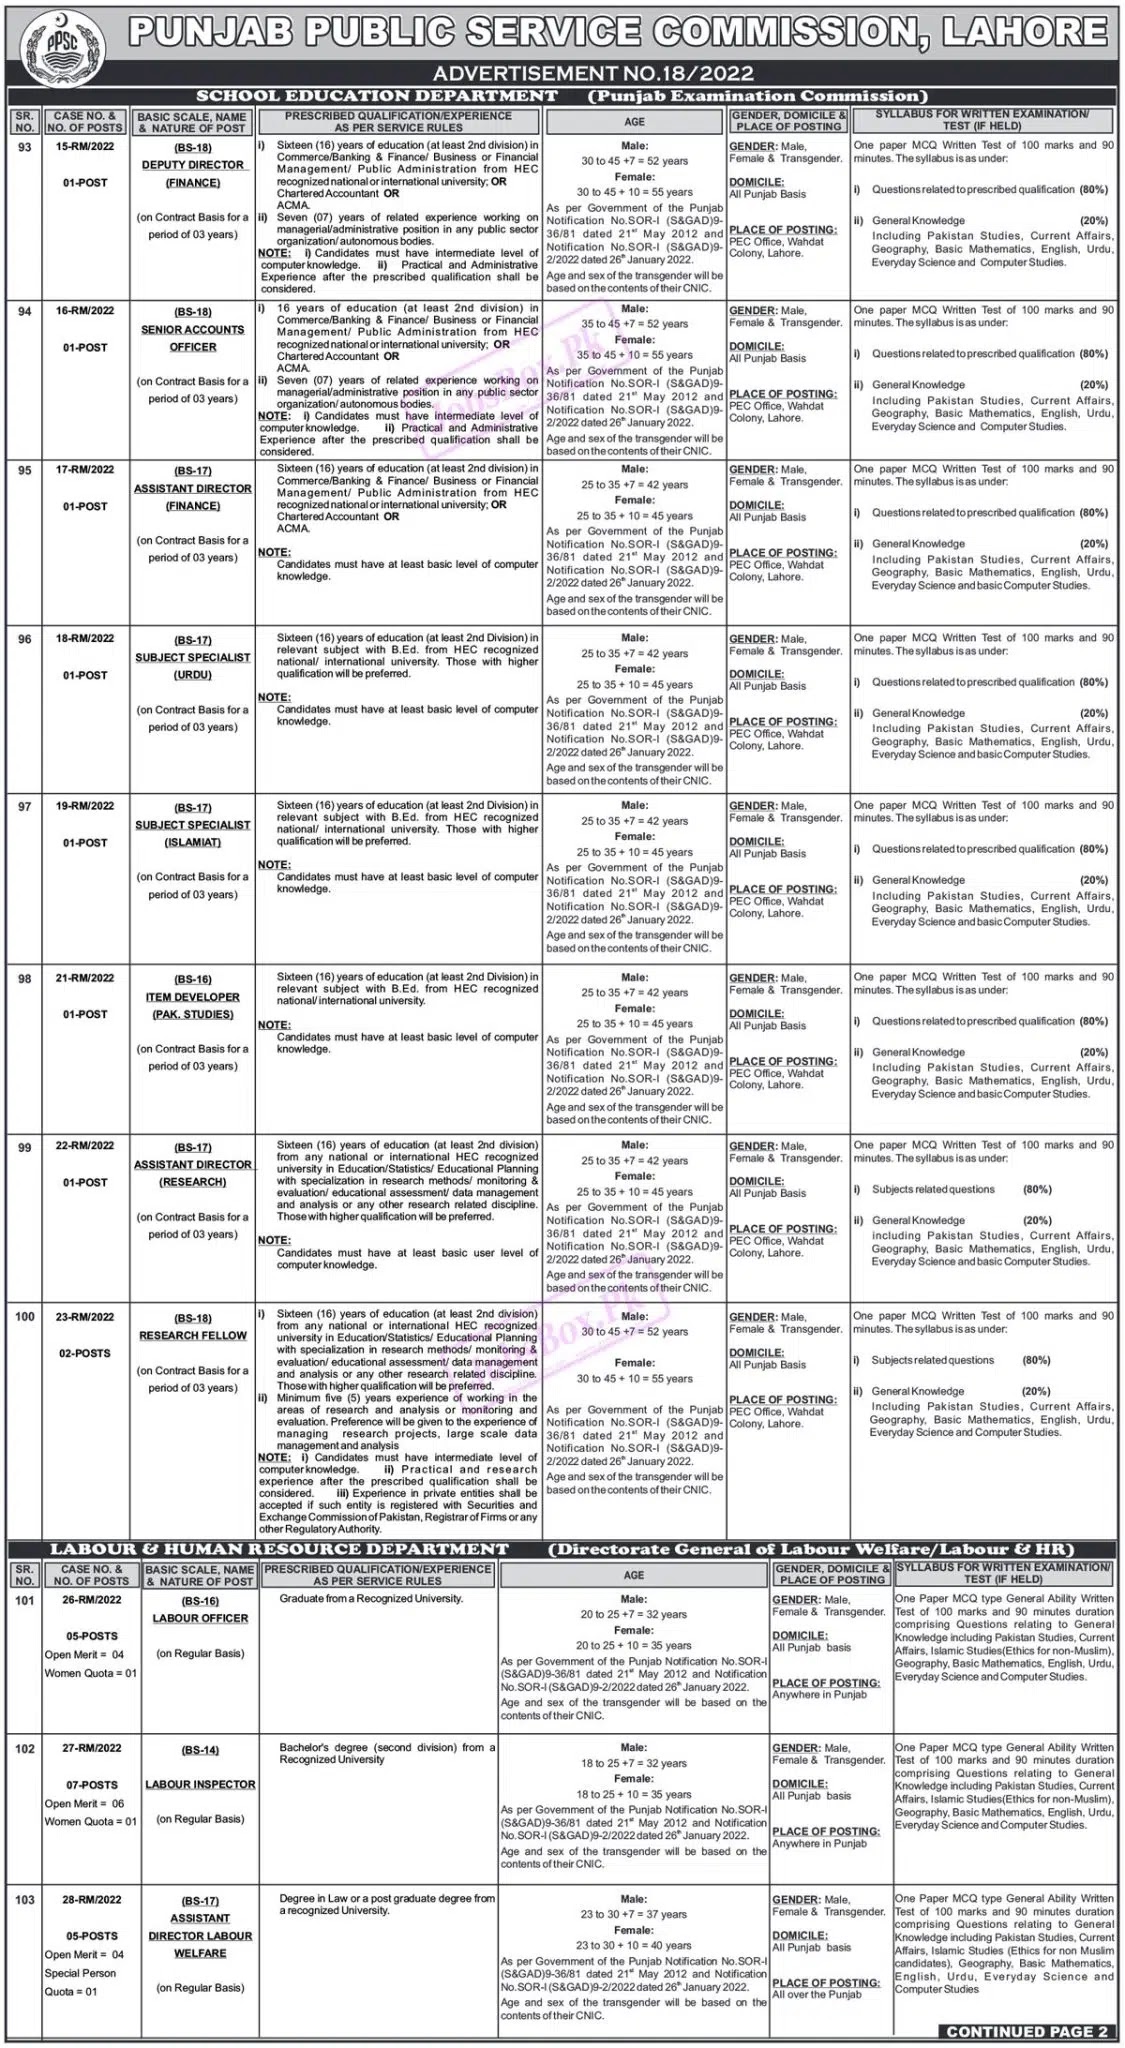 PPSC Jobs 2022 Educators - PPSC Jobs 2022 Advertisement PDF - www.ppsc.gop.pk Jobs 2022 Online Apply - Punjab Public Service Commission Jobs 2022 Advertisement